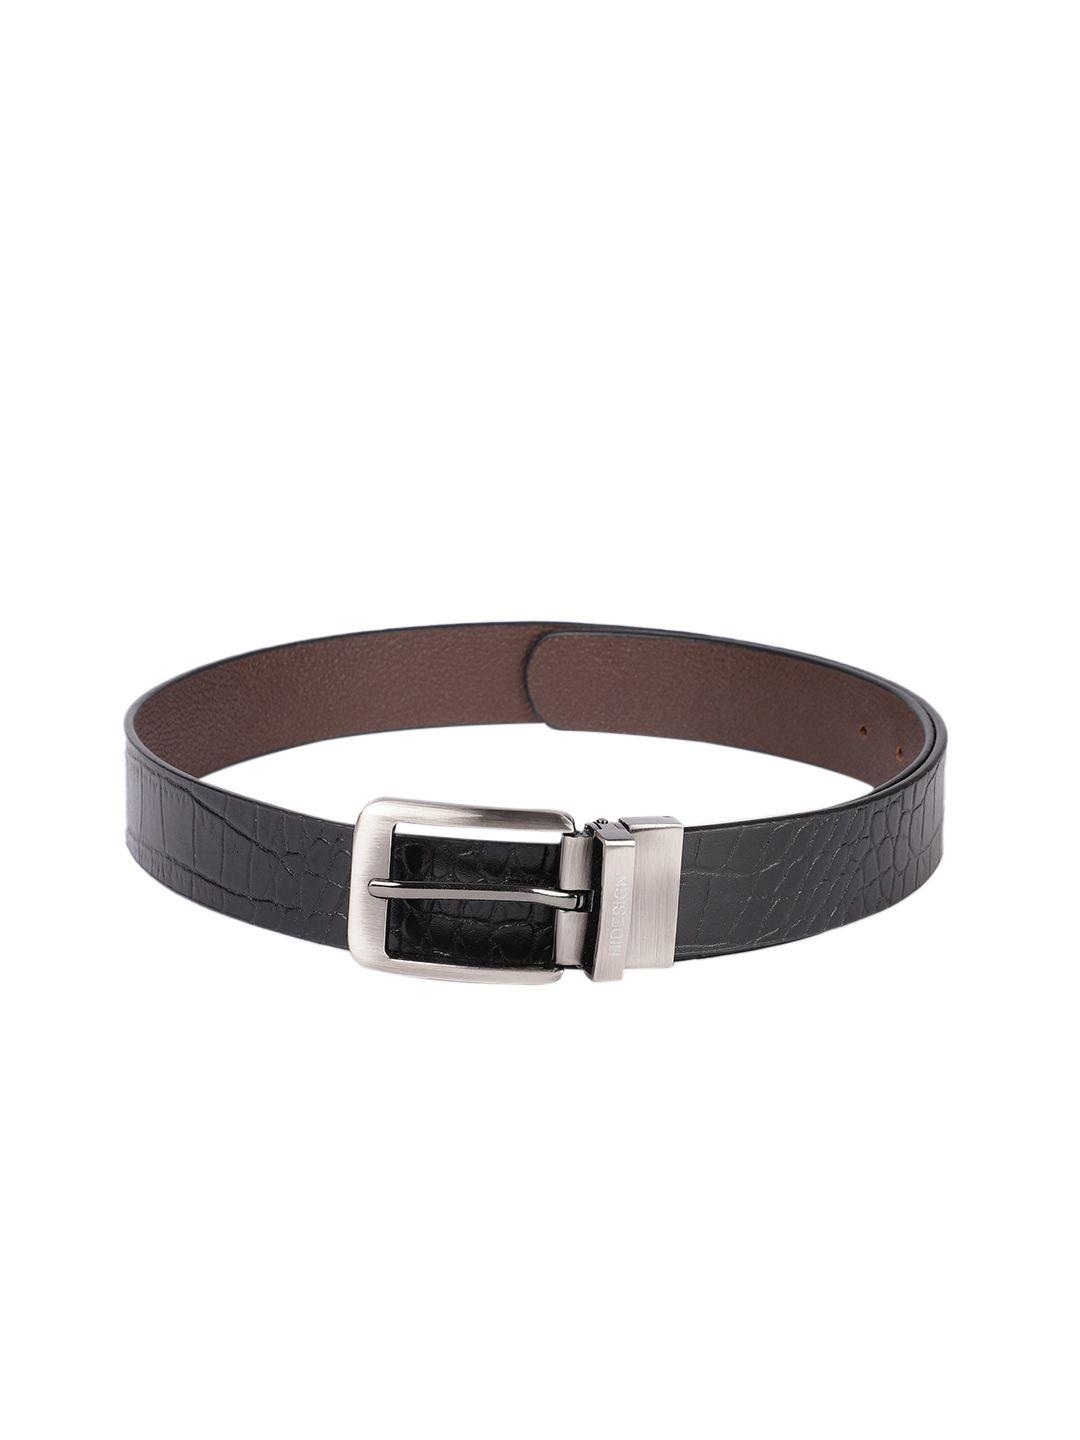 hidesign-men-black-&-brown-textured-reversible-leather-belt